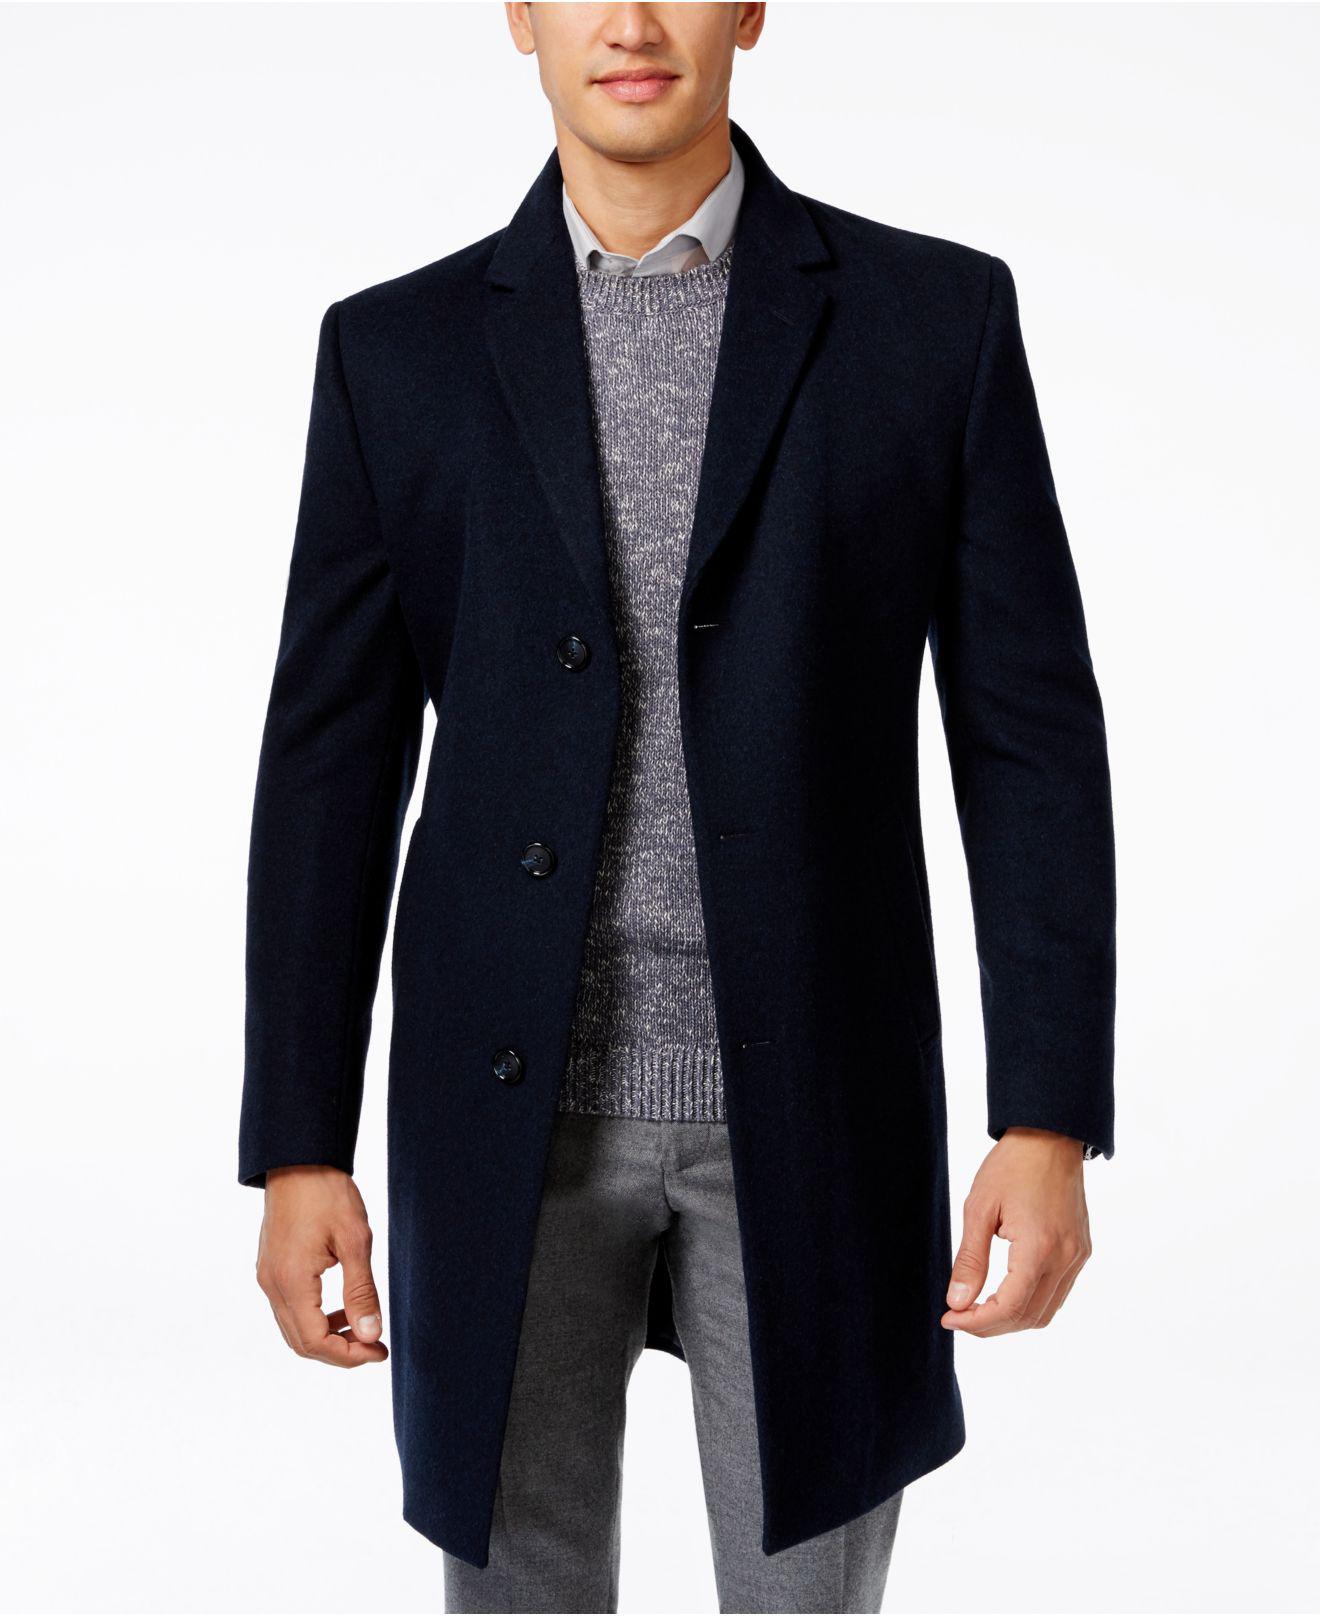 Kenneth Cole Reaction Raburn Wool-Blend Slim-Fit Over Coat in Navy (Blue)  for Men - Lyst